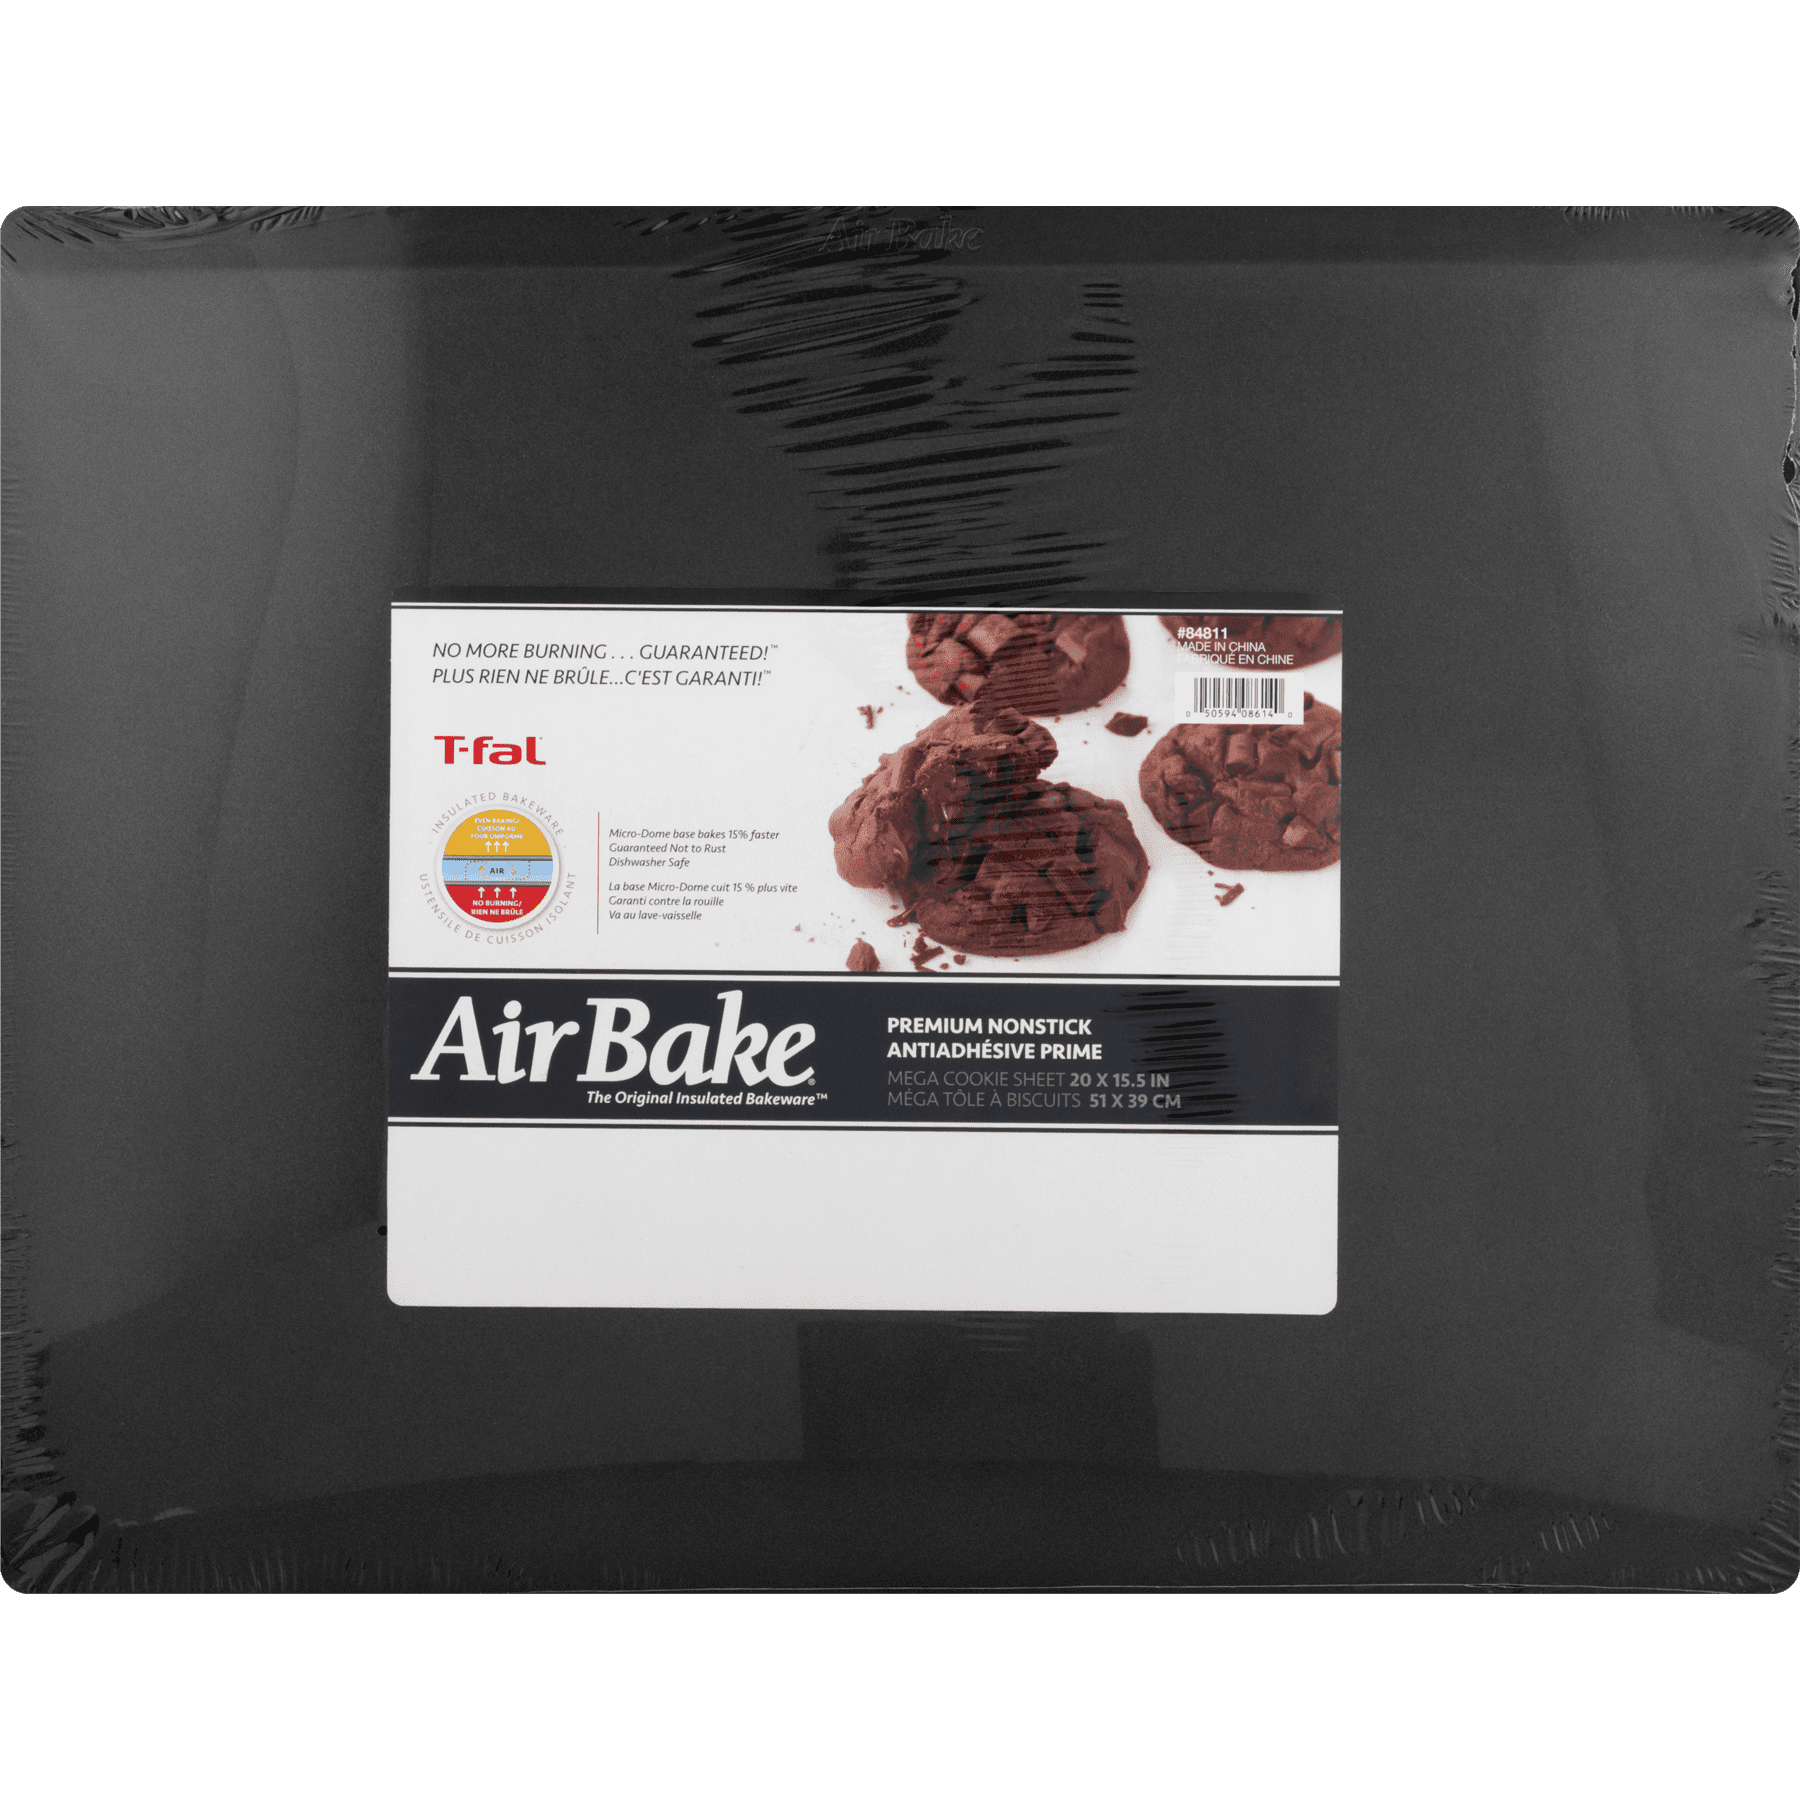 AirBake Ultra Mega Insulated Aluminum Cookie Sheet, 20 x 15.5 in